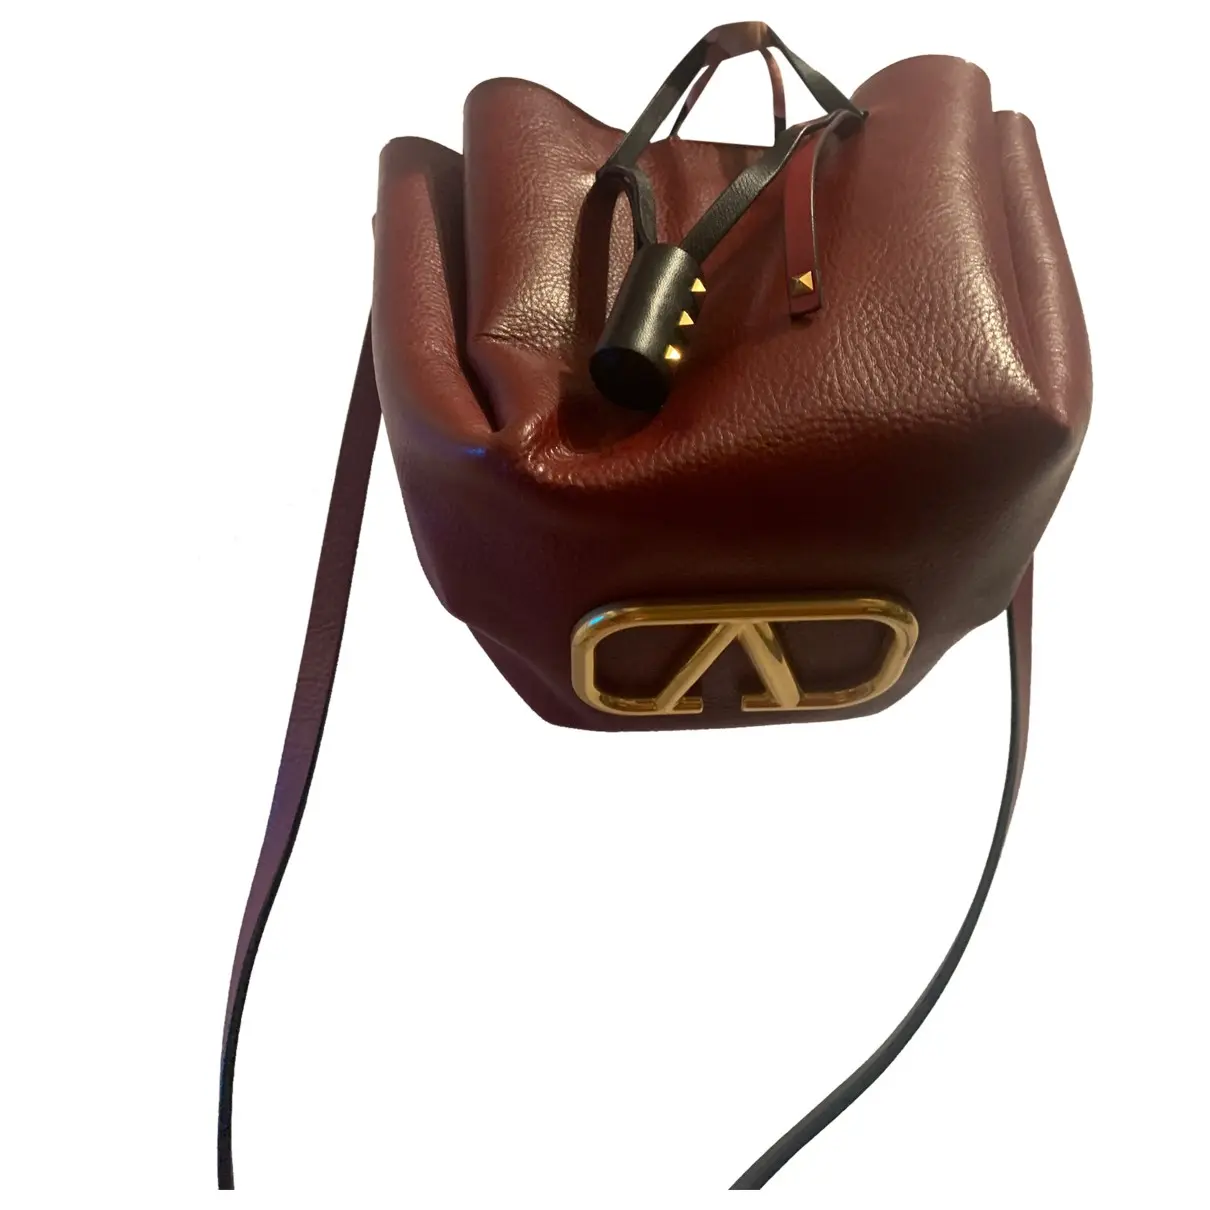 VLogo leather handbag Valentino Garavani